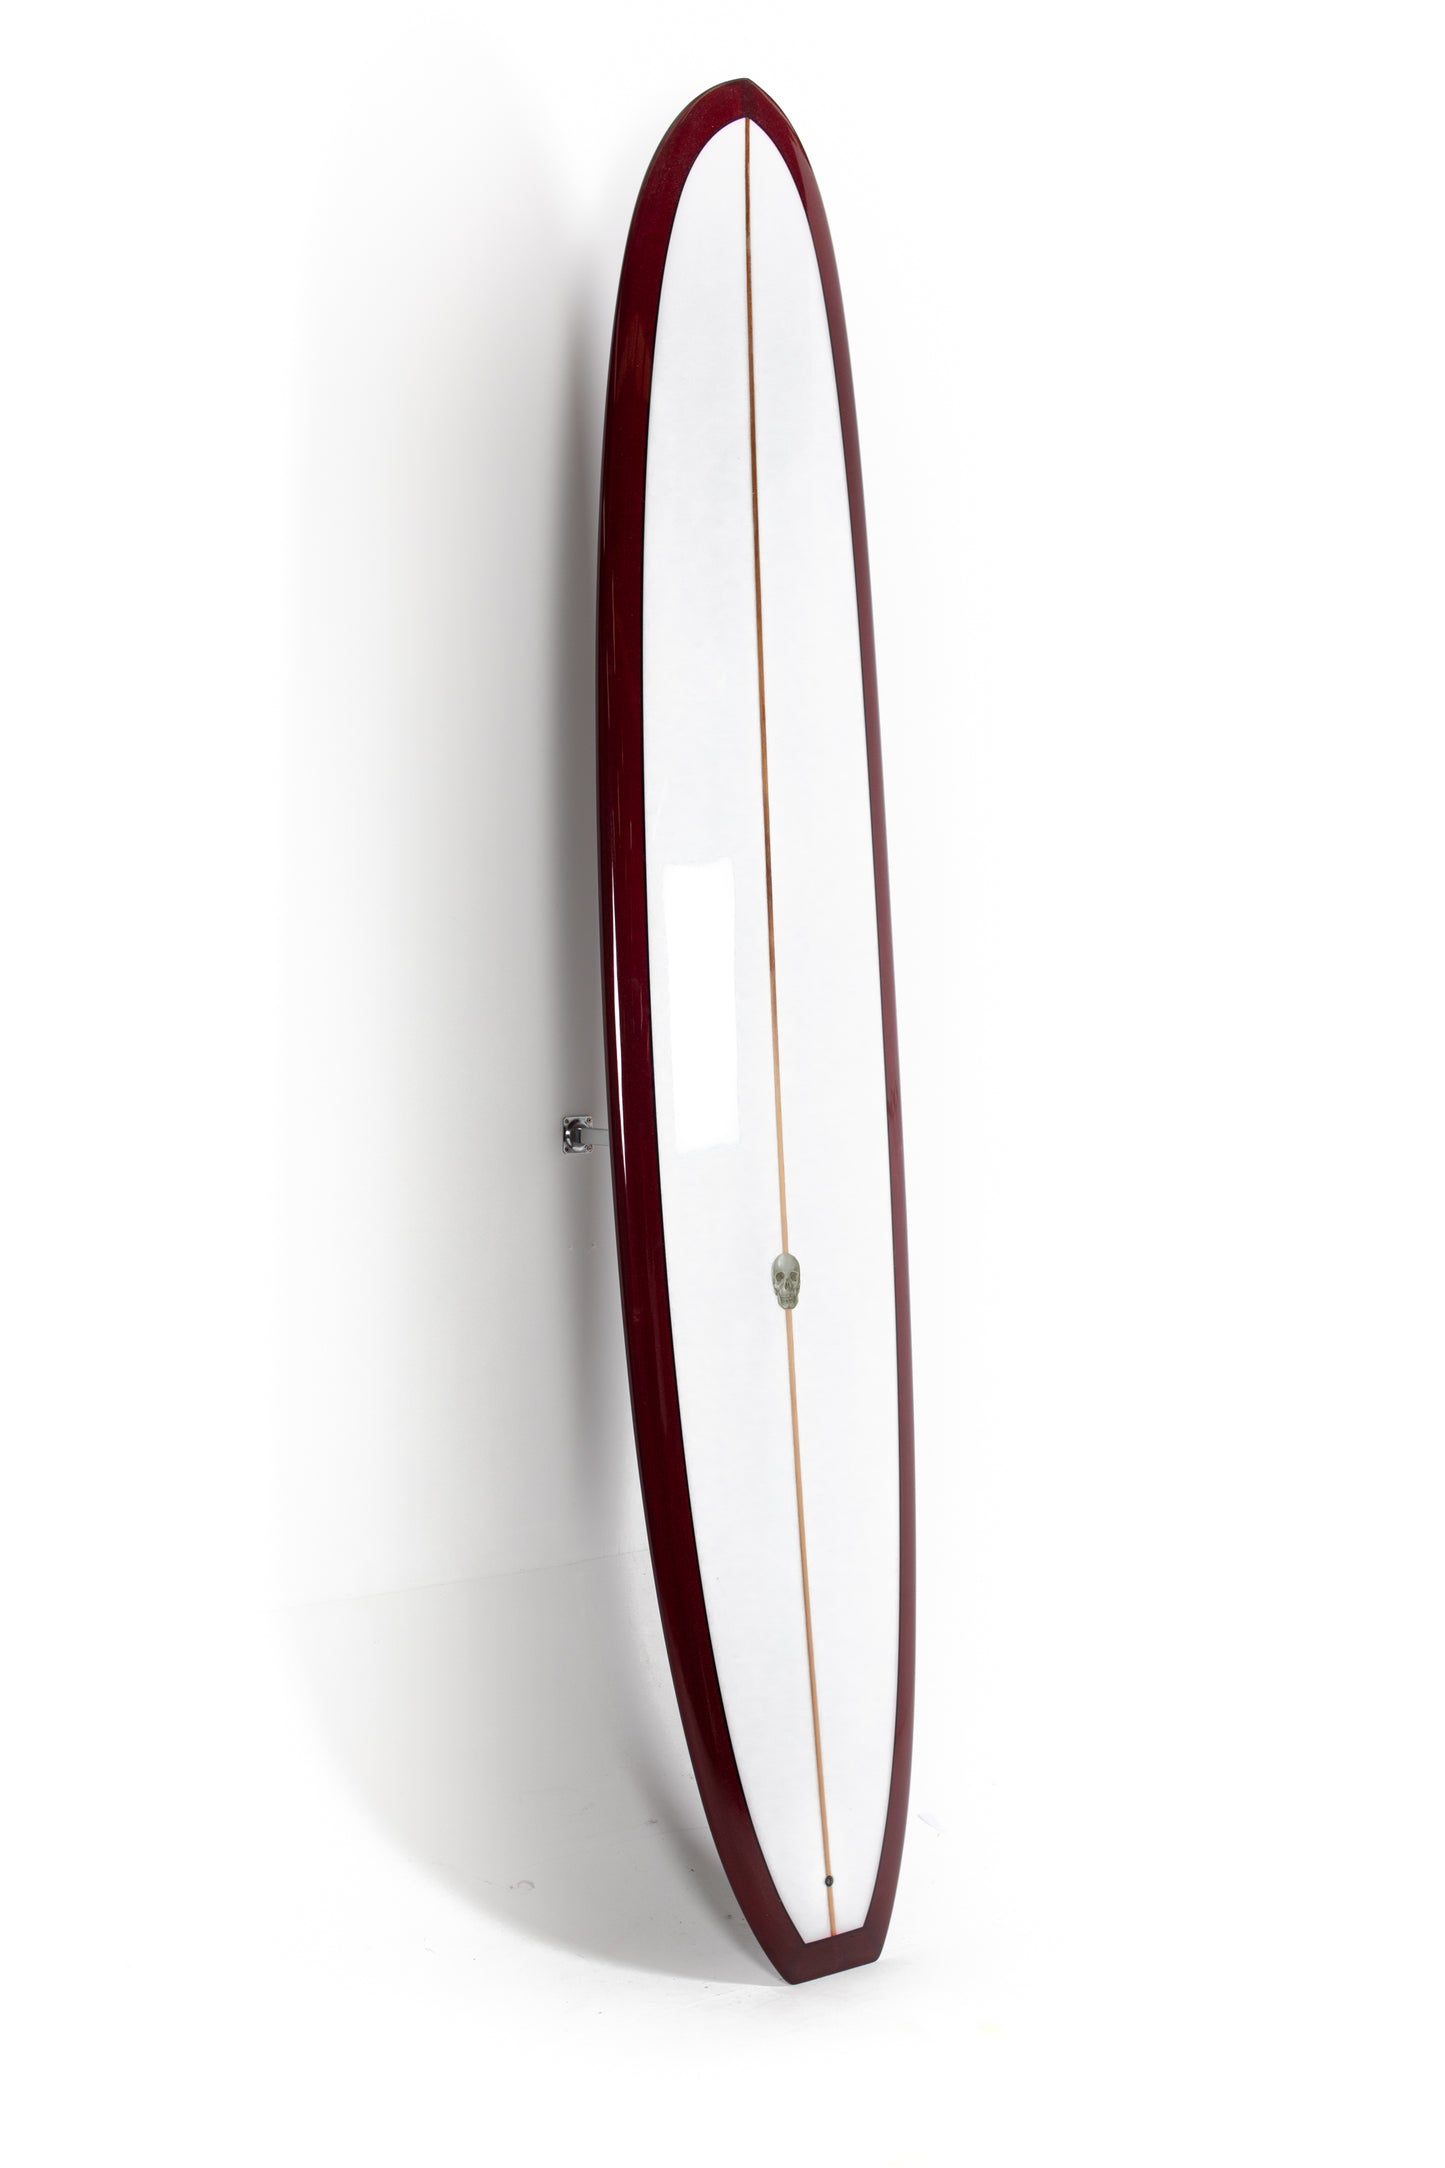 
                  
                    Pukas Surf Shop - Christenson Surfboard  - SCARLET BEGONIA by Chris Christenson - 9'5” x 23 3/16" x 2 13/16" - CX05367
                  
                